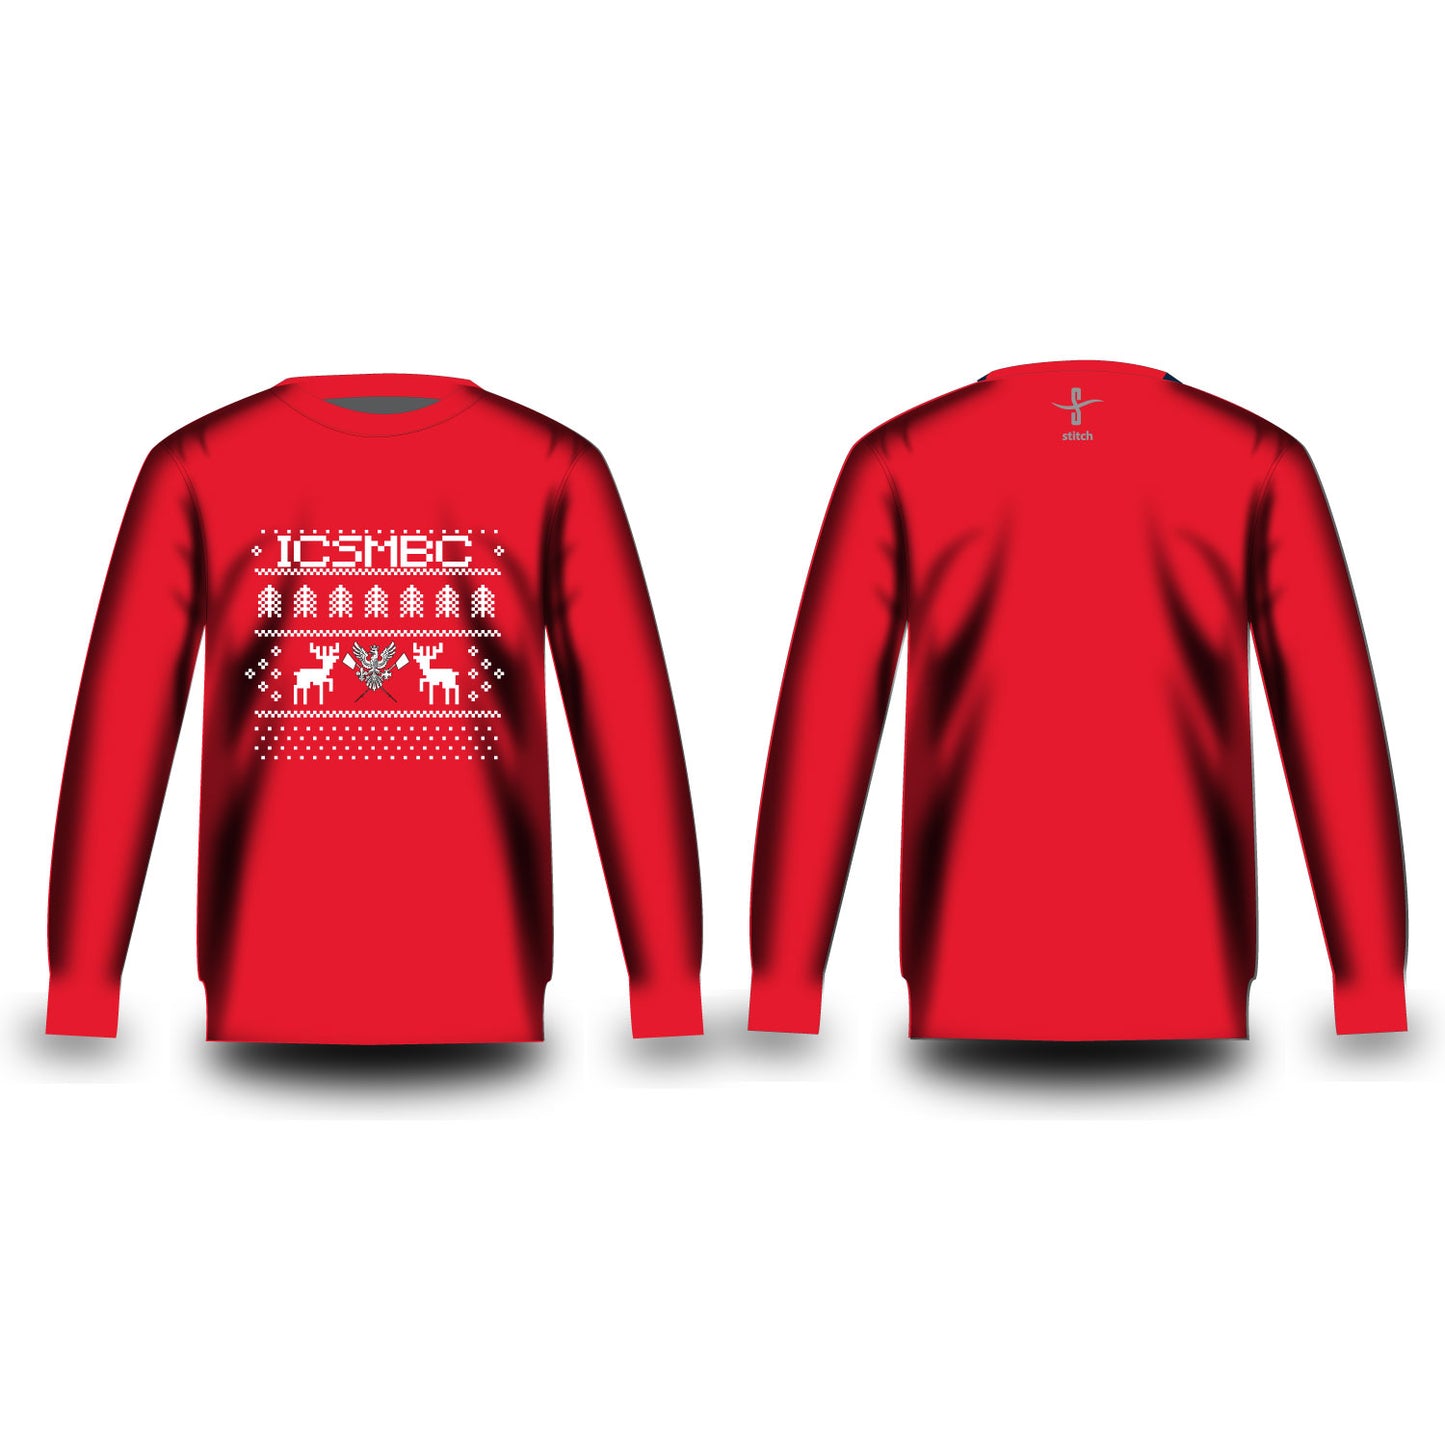 Imperial Medics Boat Club Christmas Jumper Sweatshirt Red